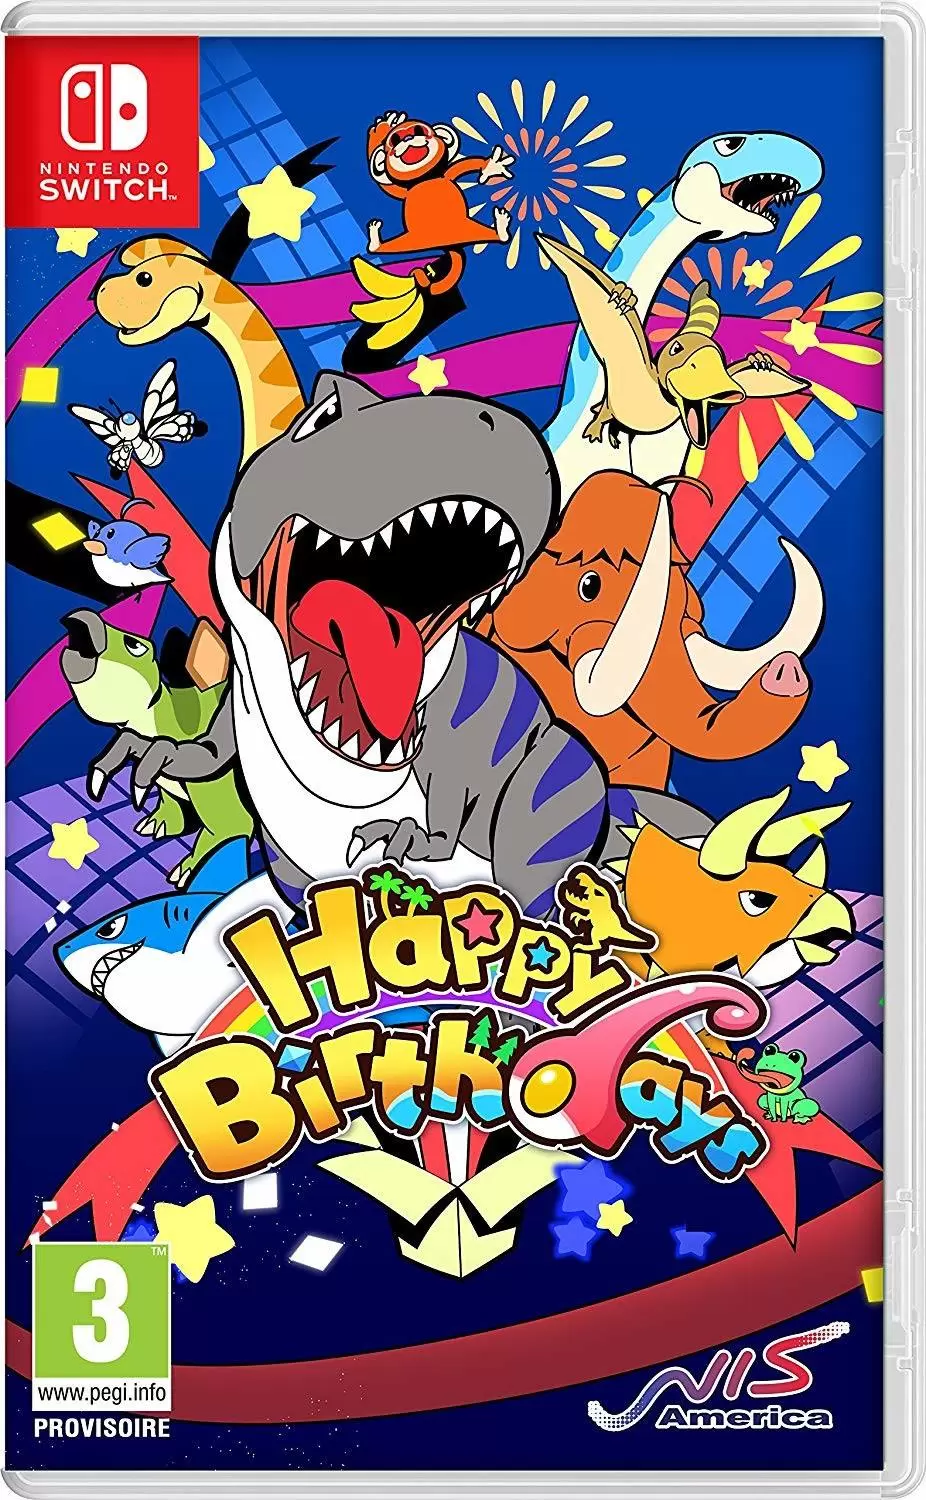 Nintendo Switch Games - Happy Birthdays